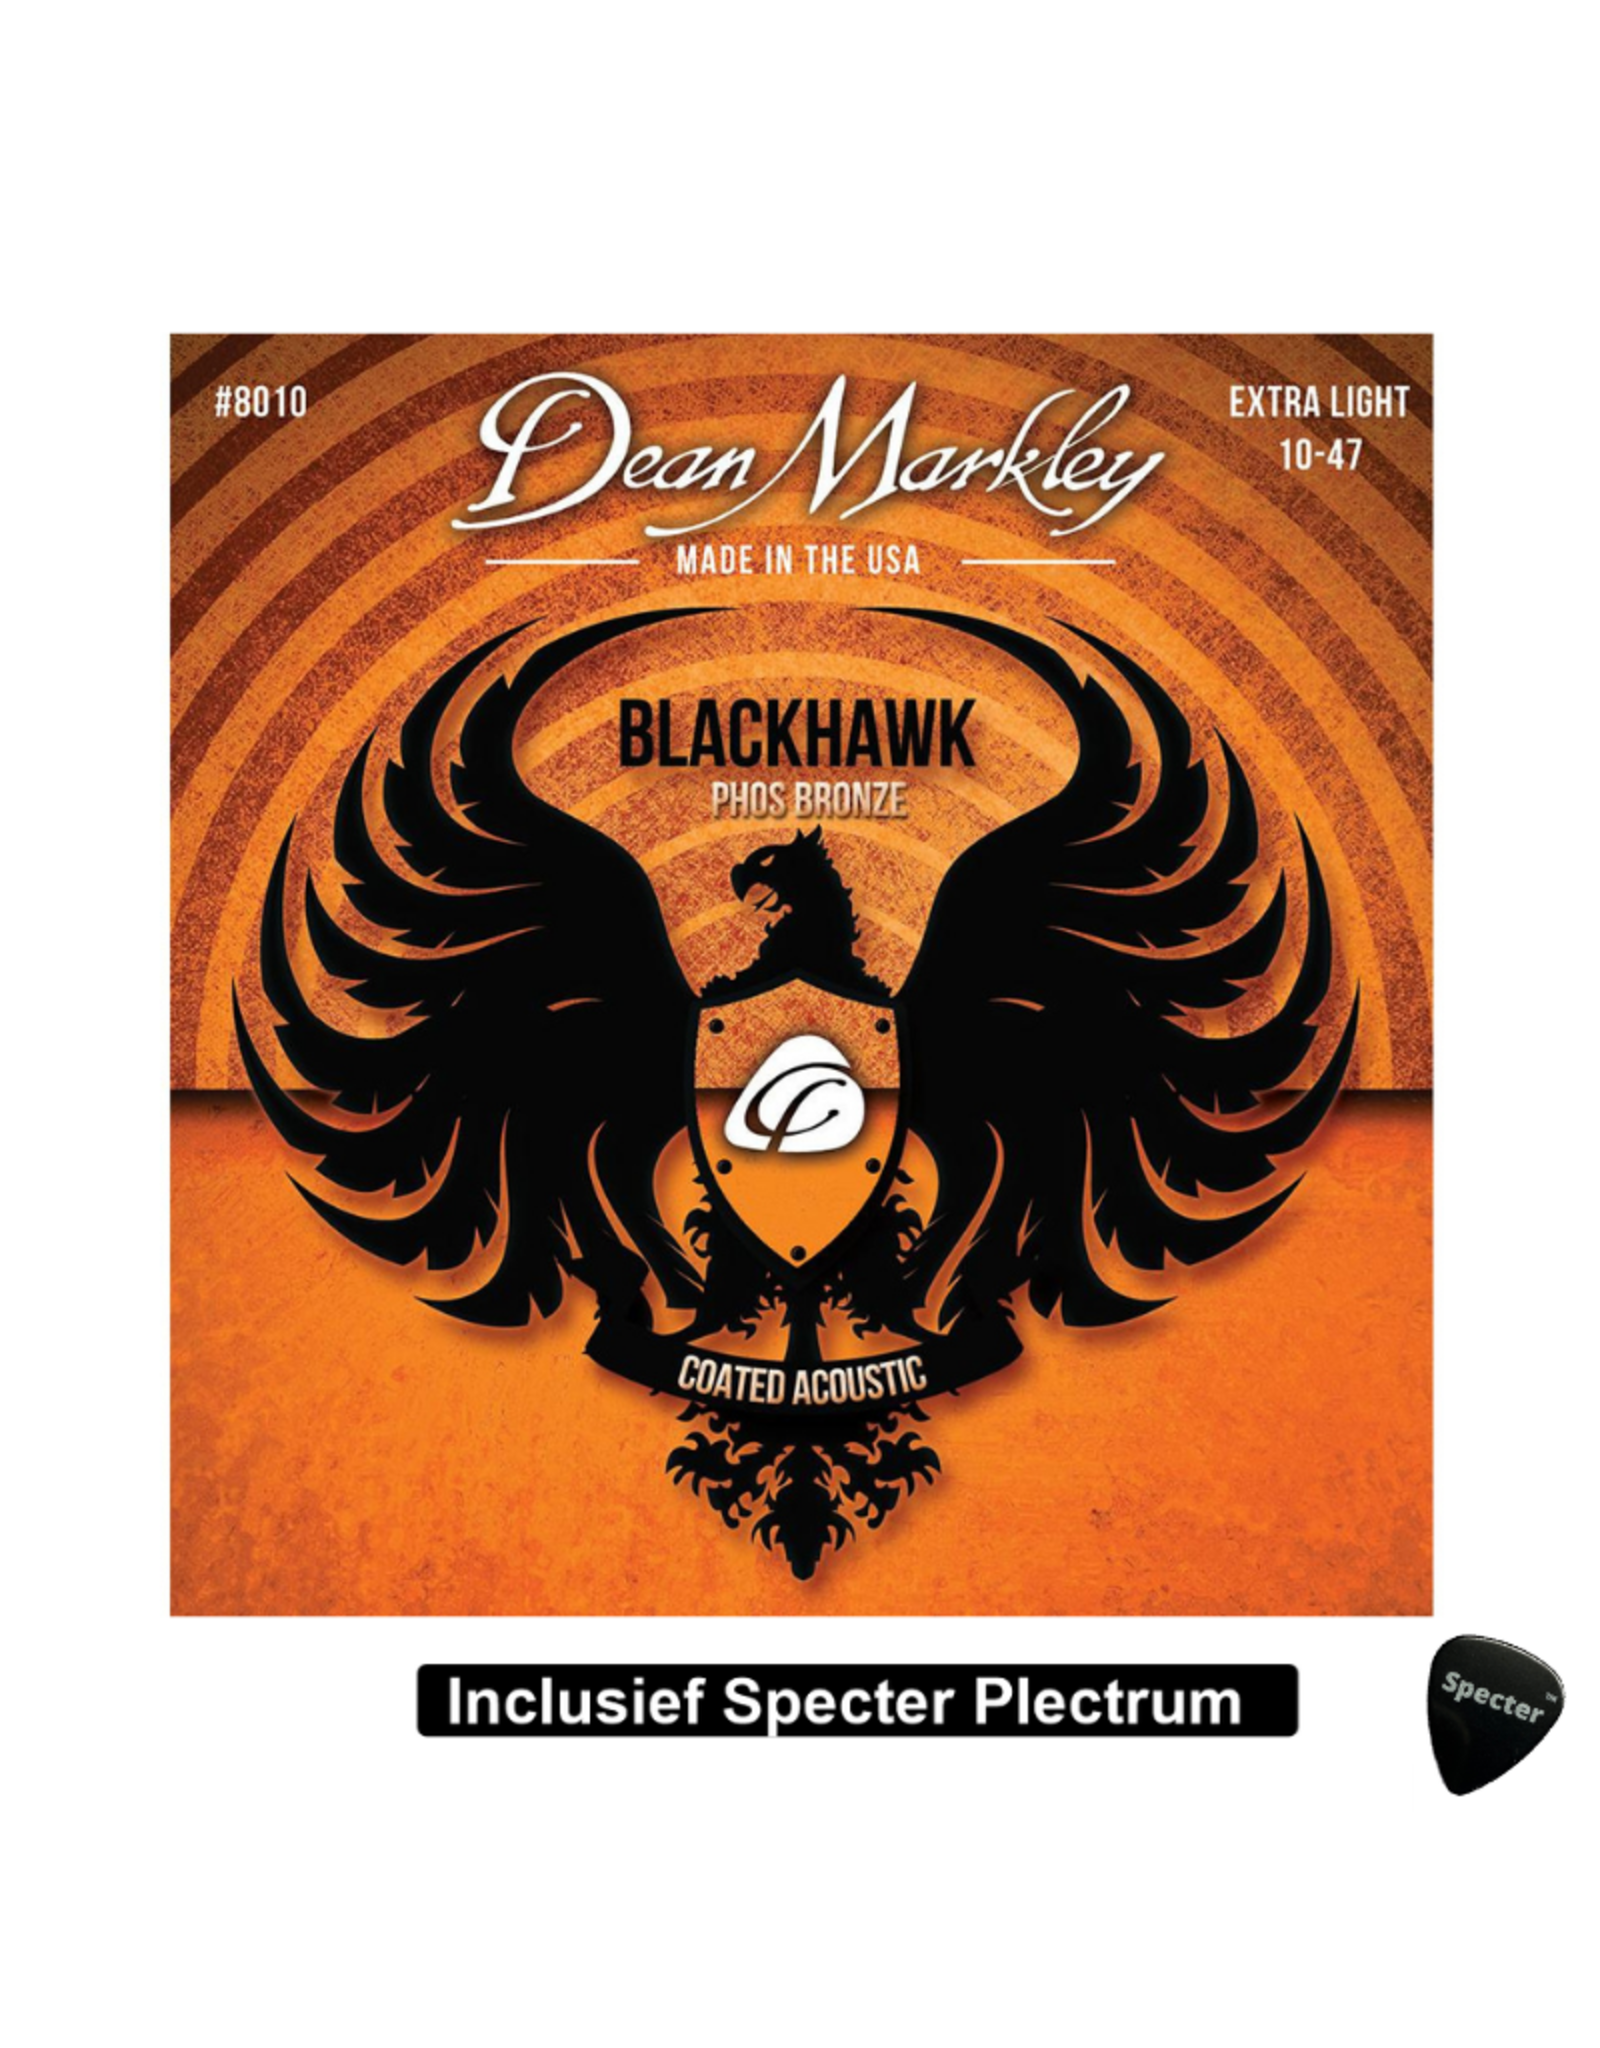 dean markley Dean Markley Blackhawk Akoestische gitaarsnaren Extra Light met Plectrum | Snarenset | Akoestisch